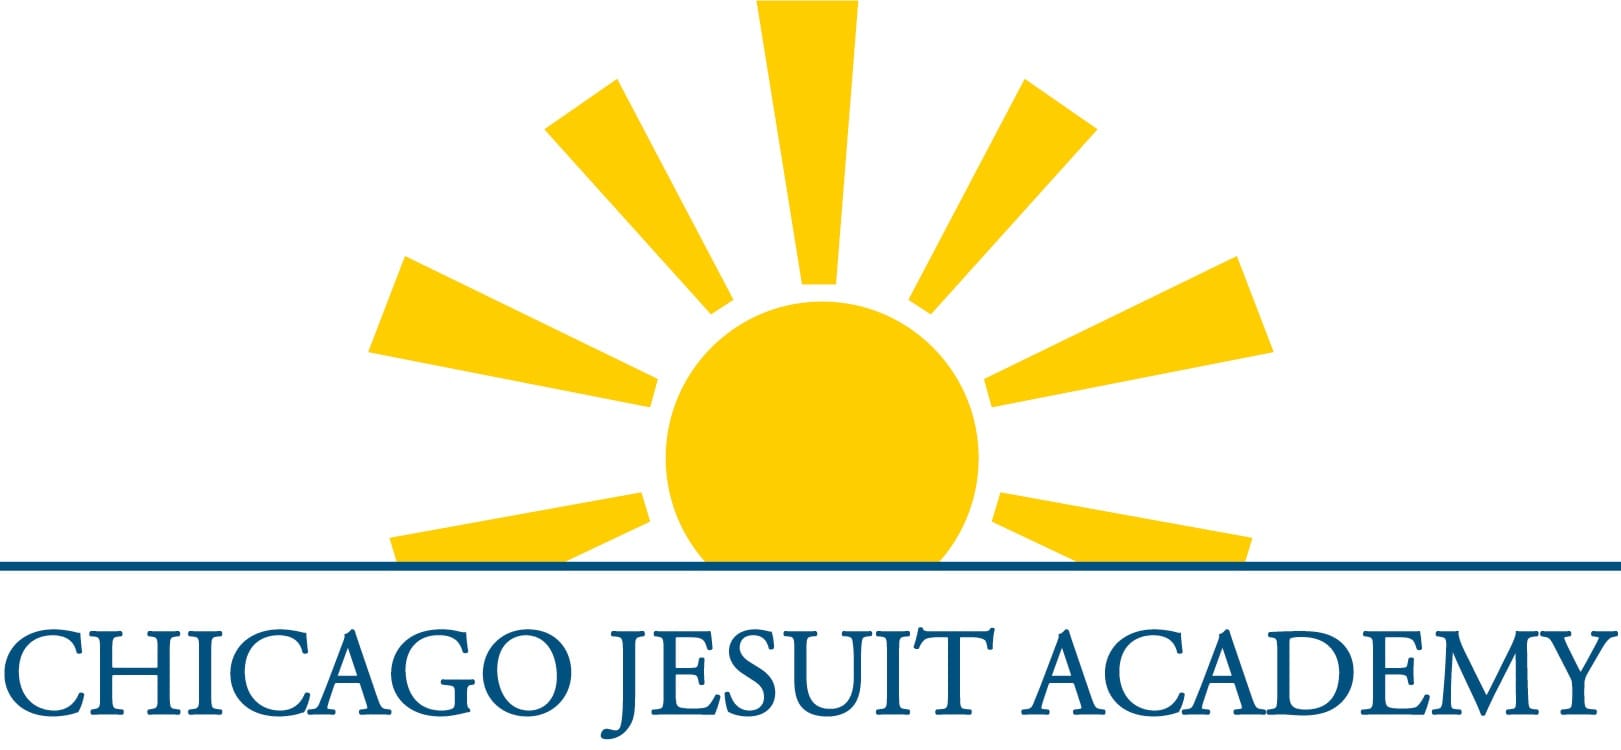 Chicago Jesuit Academy Jesuit Schools Network